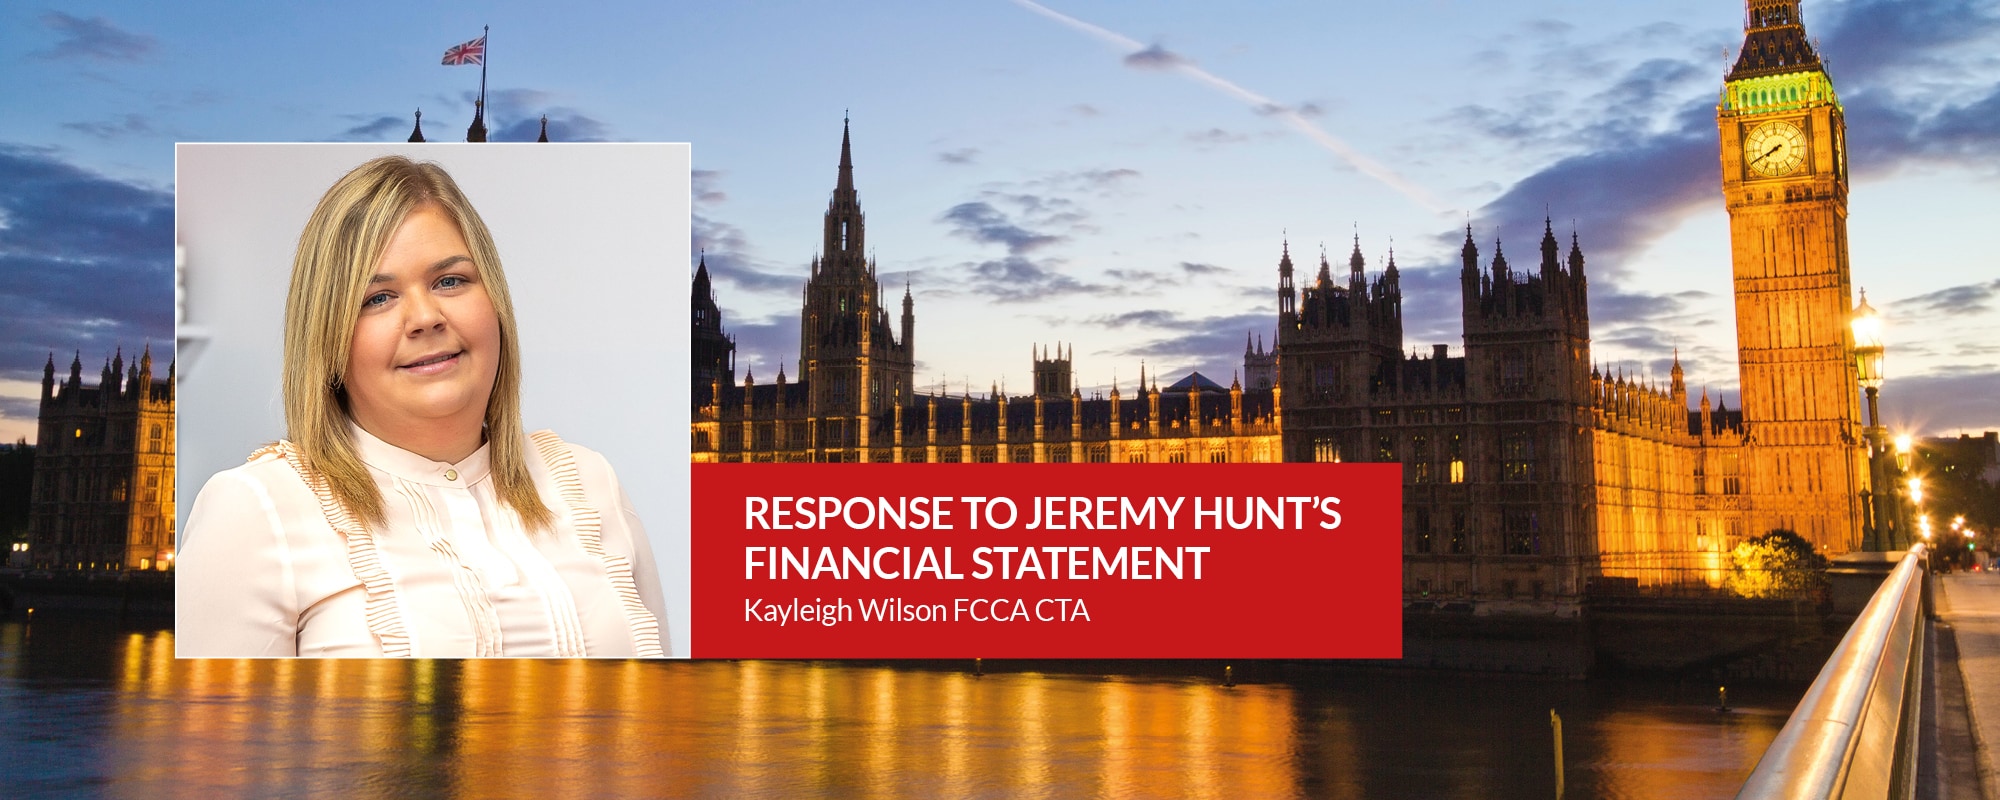 Jeremy Hunt Financial Statement Response